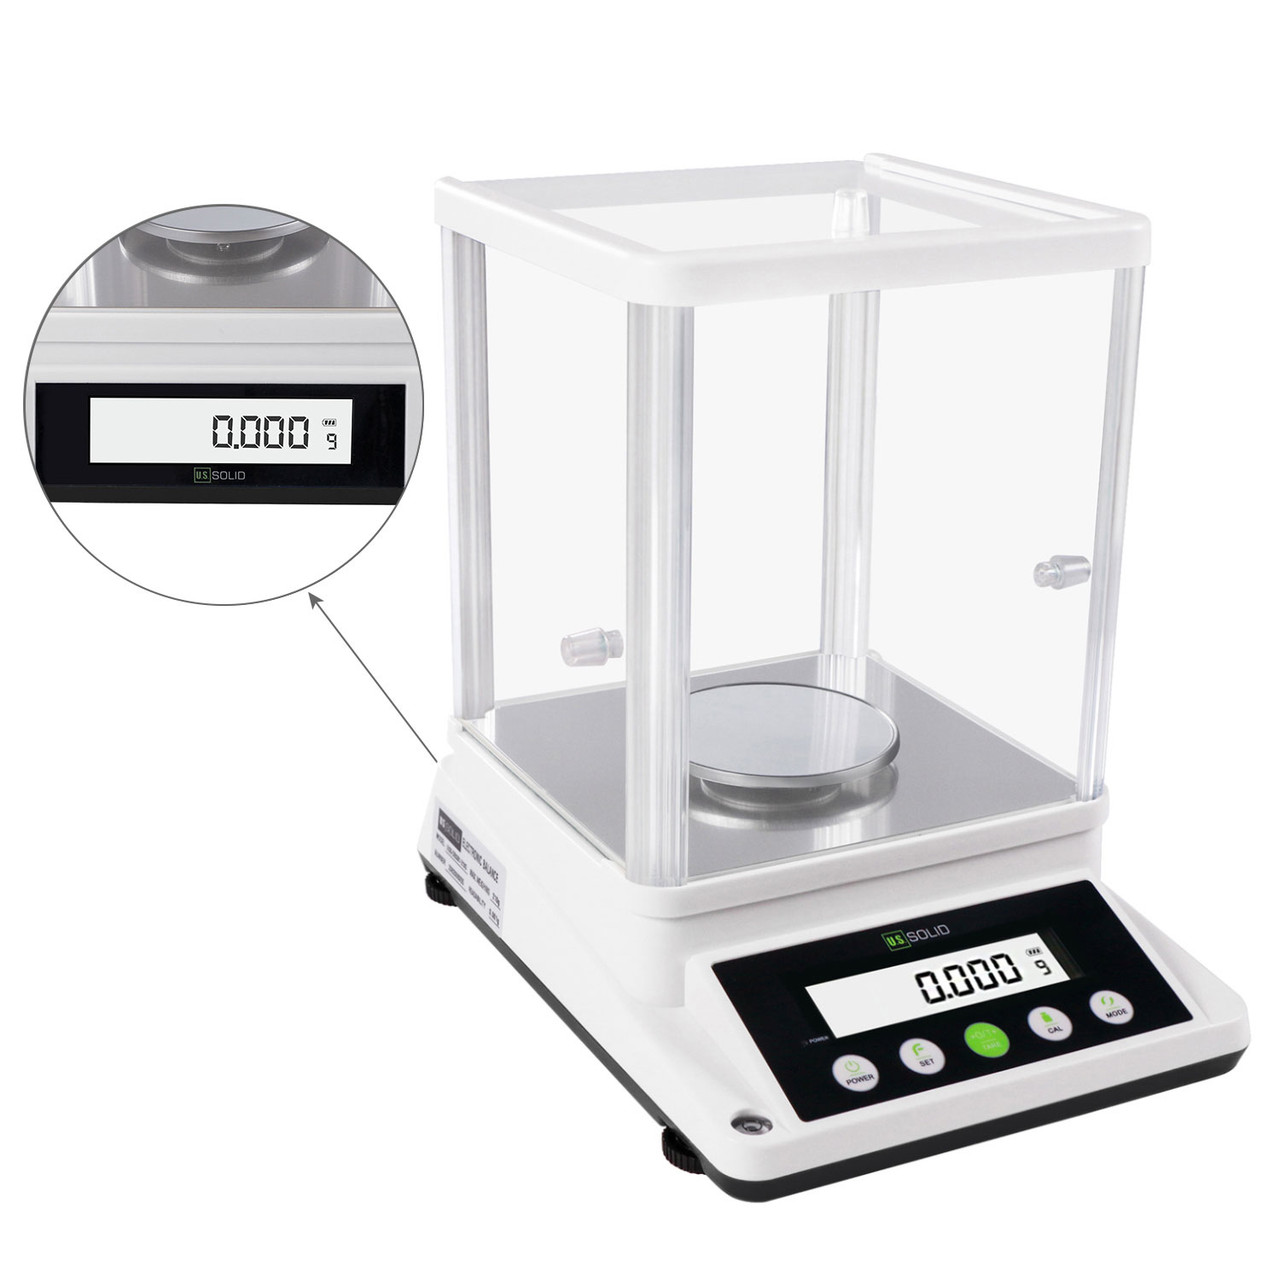 Precision Scale Electronic Laboratory Balance Manufacturer,precision Scale  Electronic Laboratory Balance Price